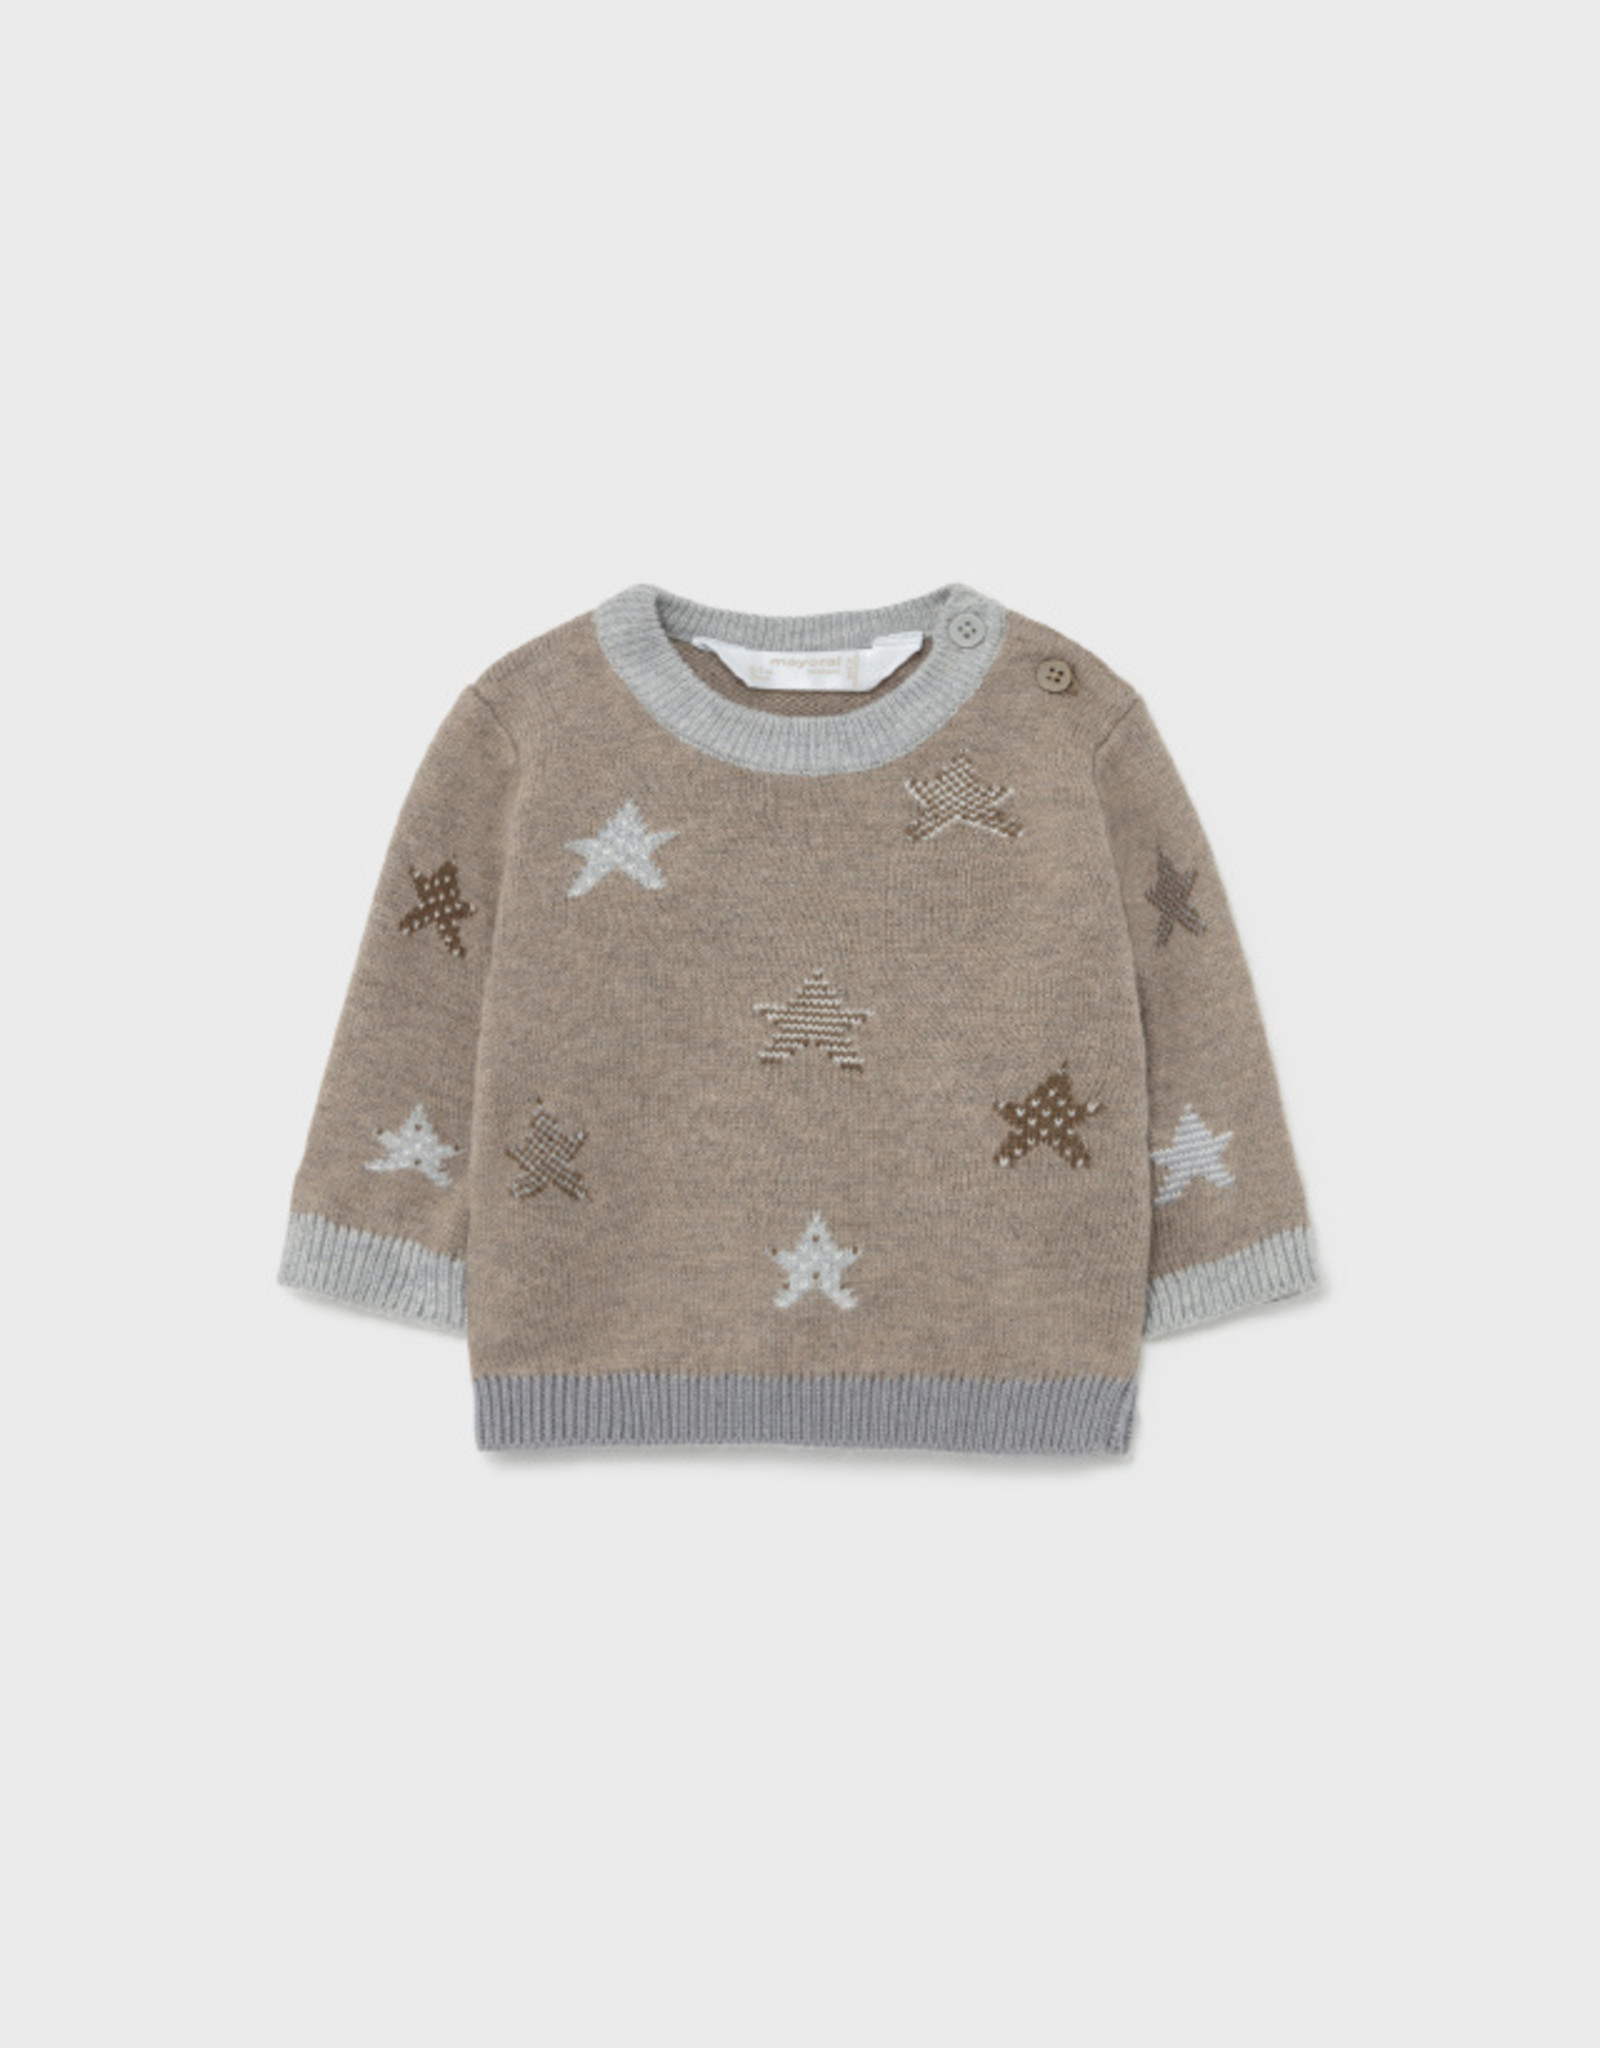 Mayoral FA21 Brown Star Sweater